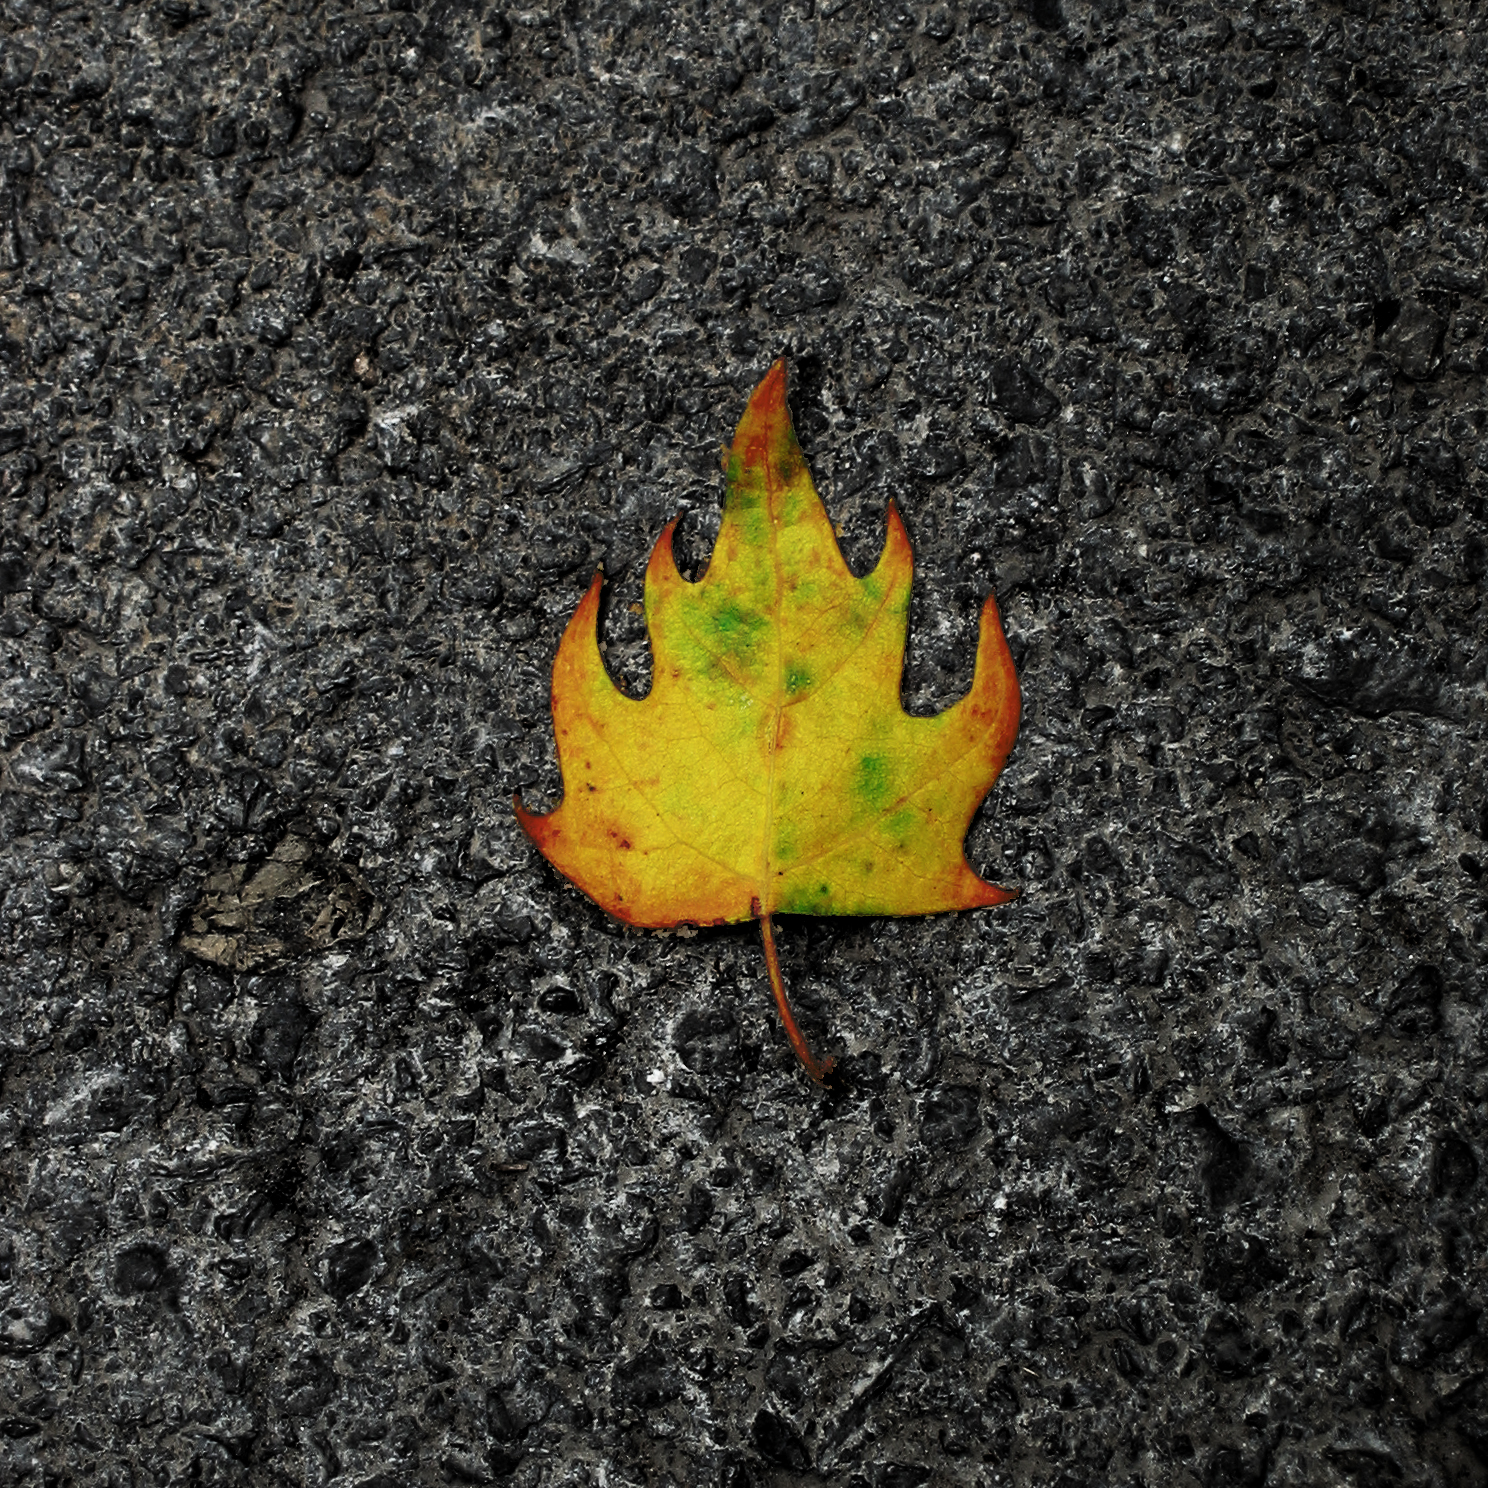 Burning leaf